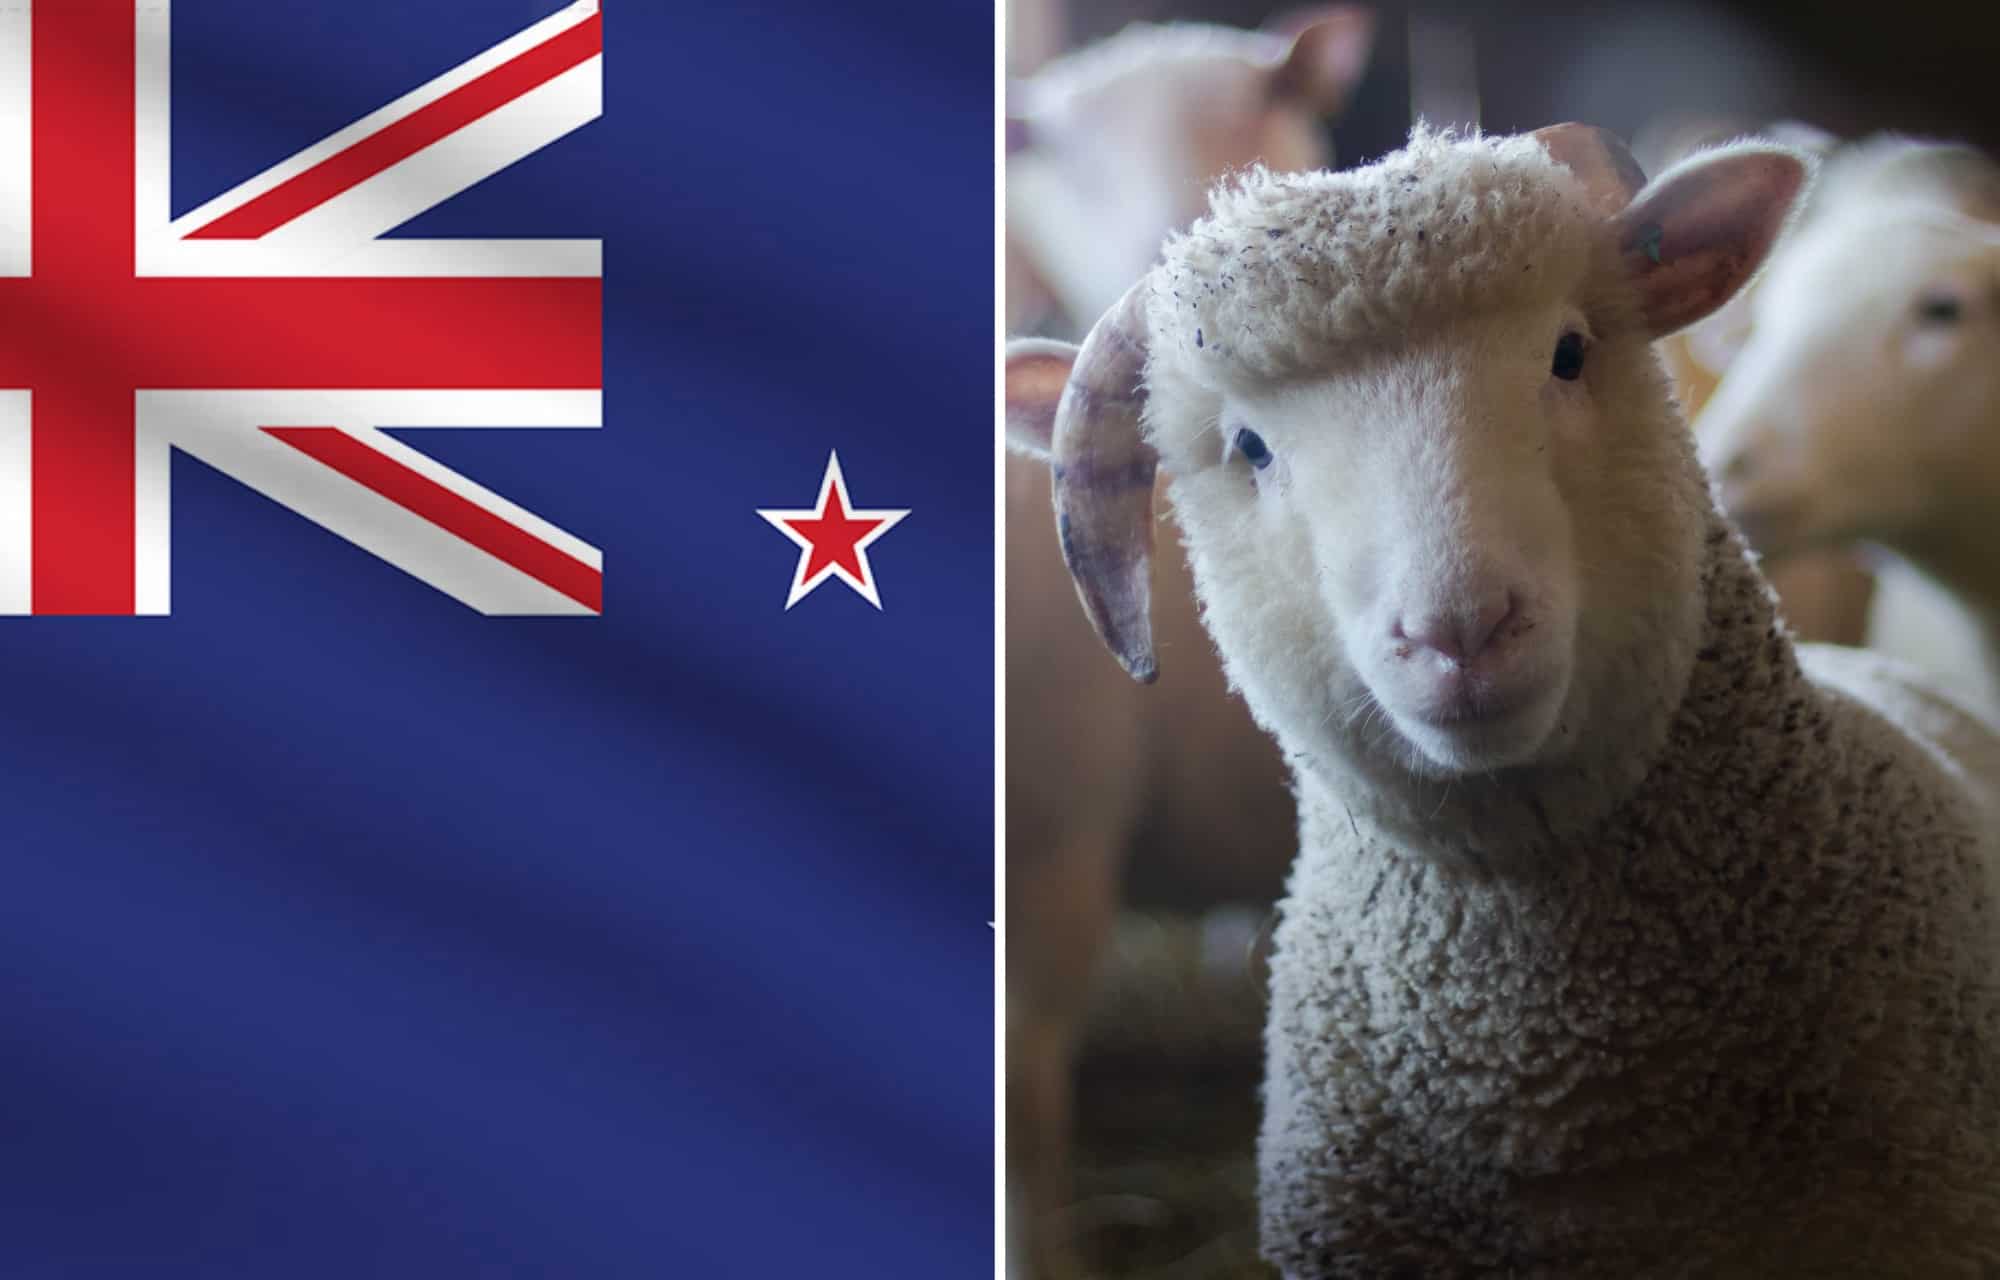 Supermarket’s flag fetish sees Union Jack blown up on New Zealand lamb